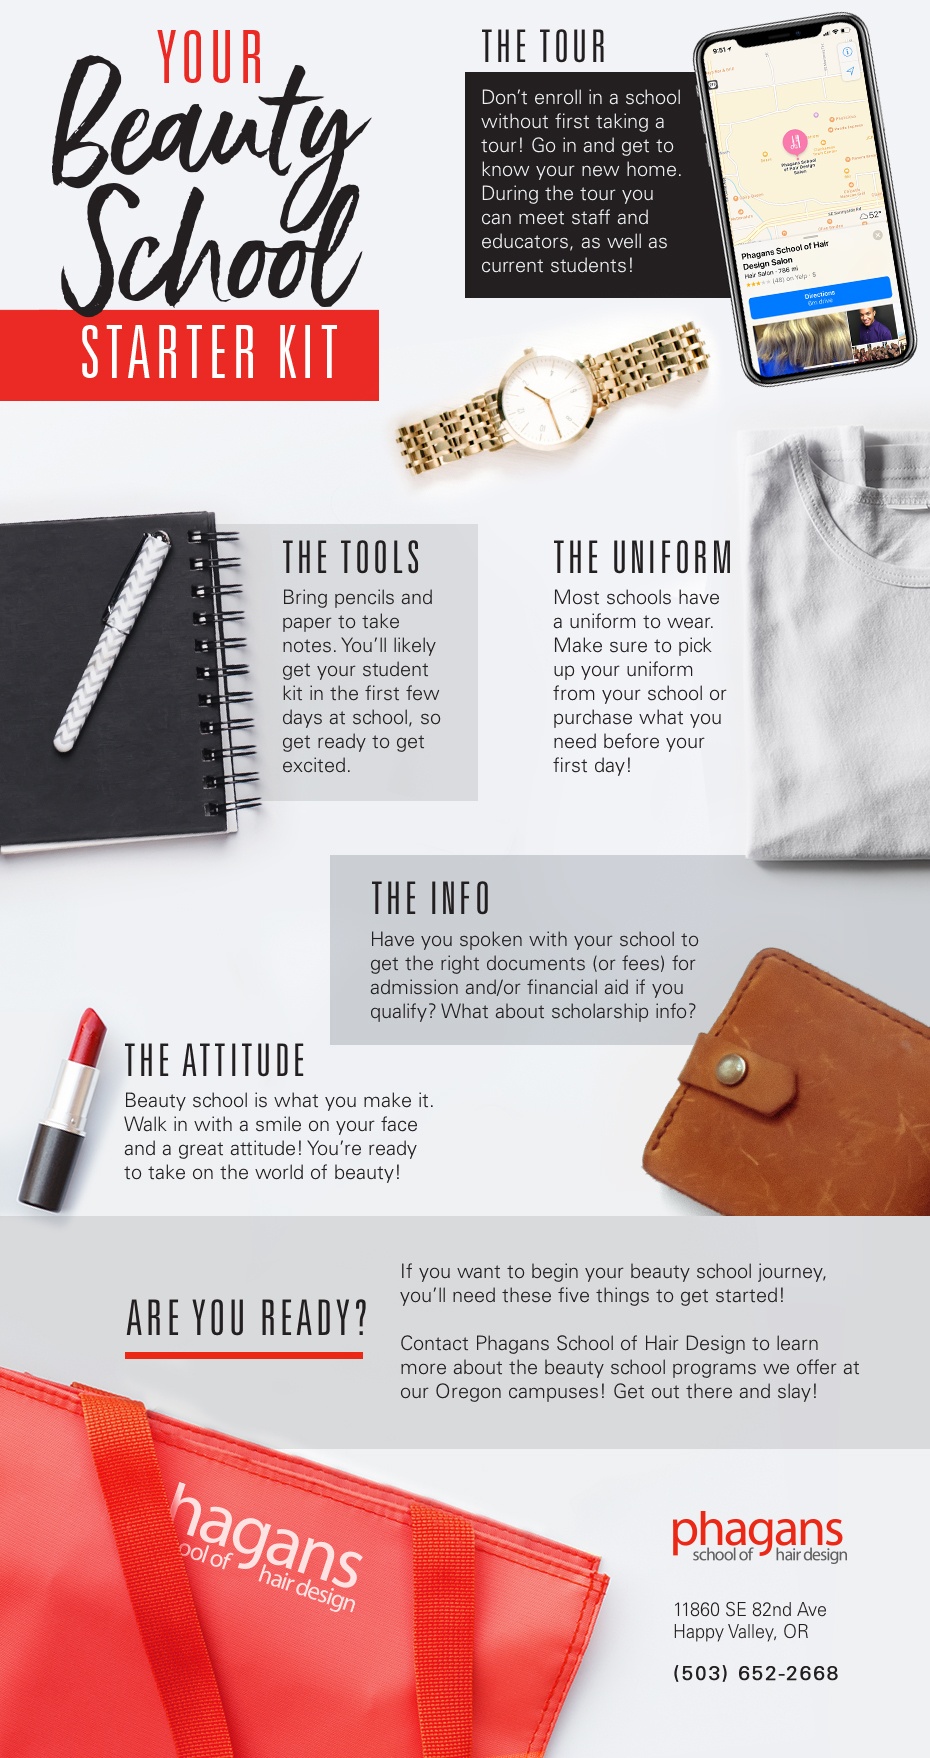 You Beauty School Starter Kit Infographic